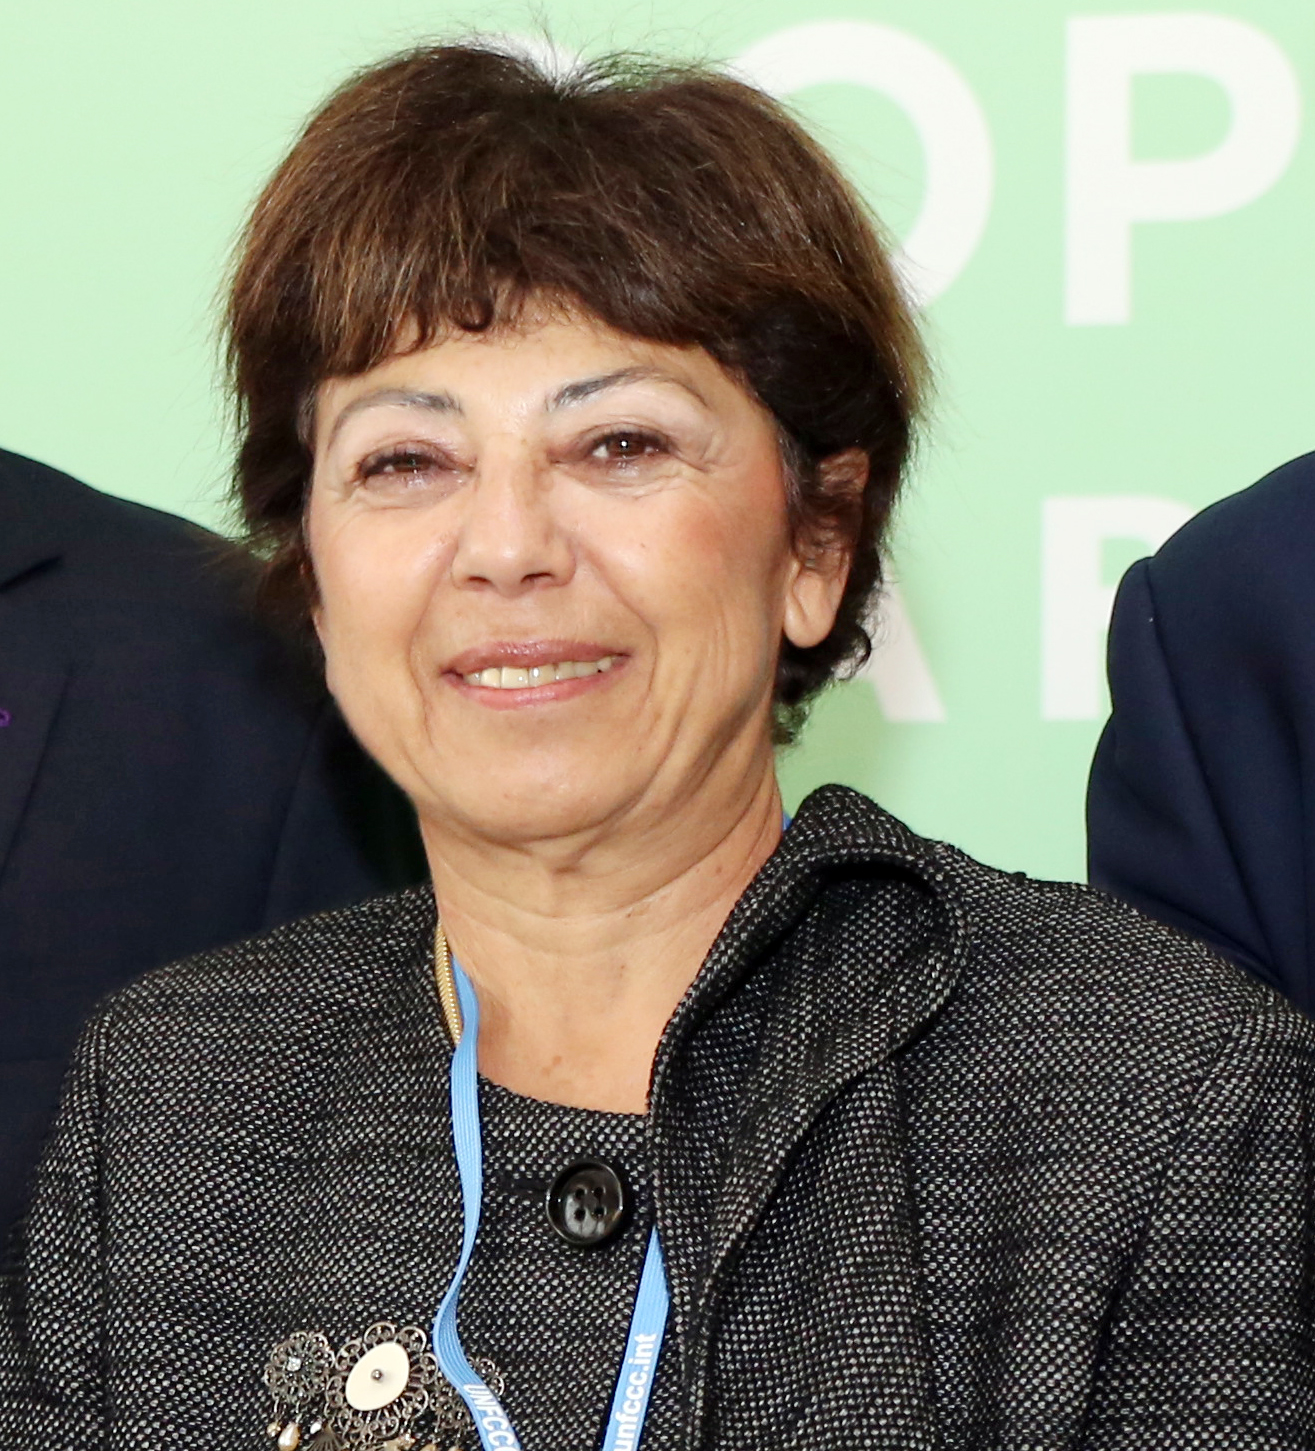 Monique Barbut, Executive Secretary of the UNCCD. Photo credit: www.iisd.ca